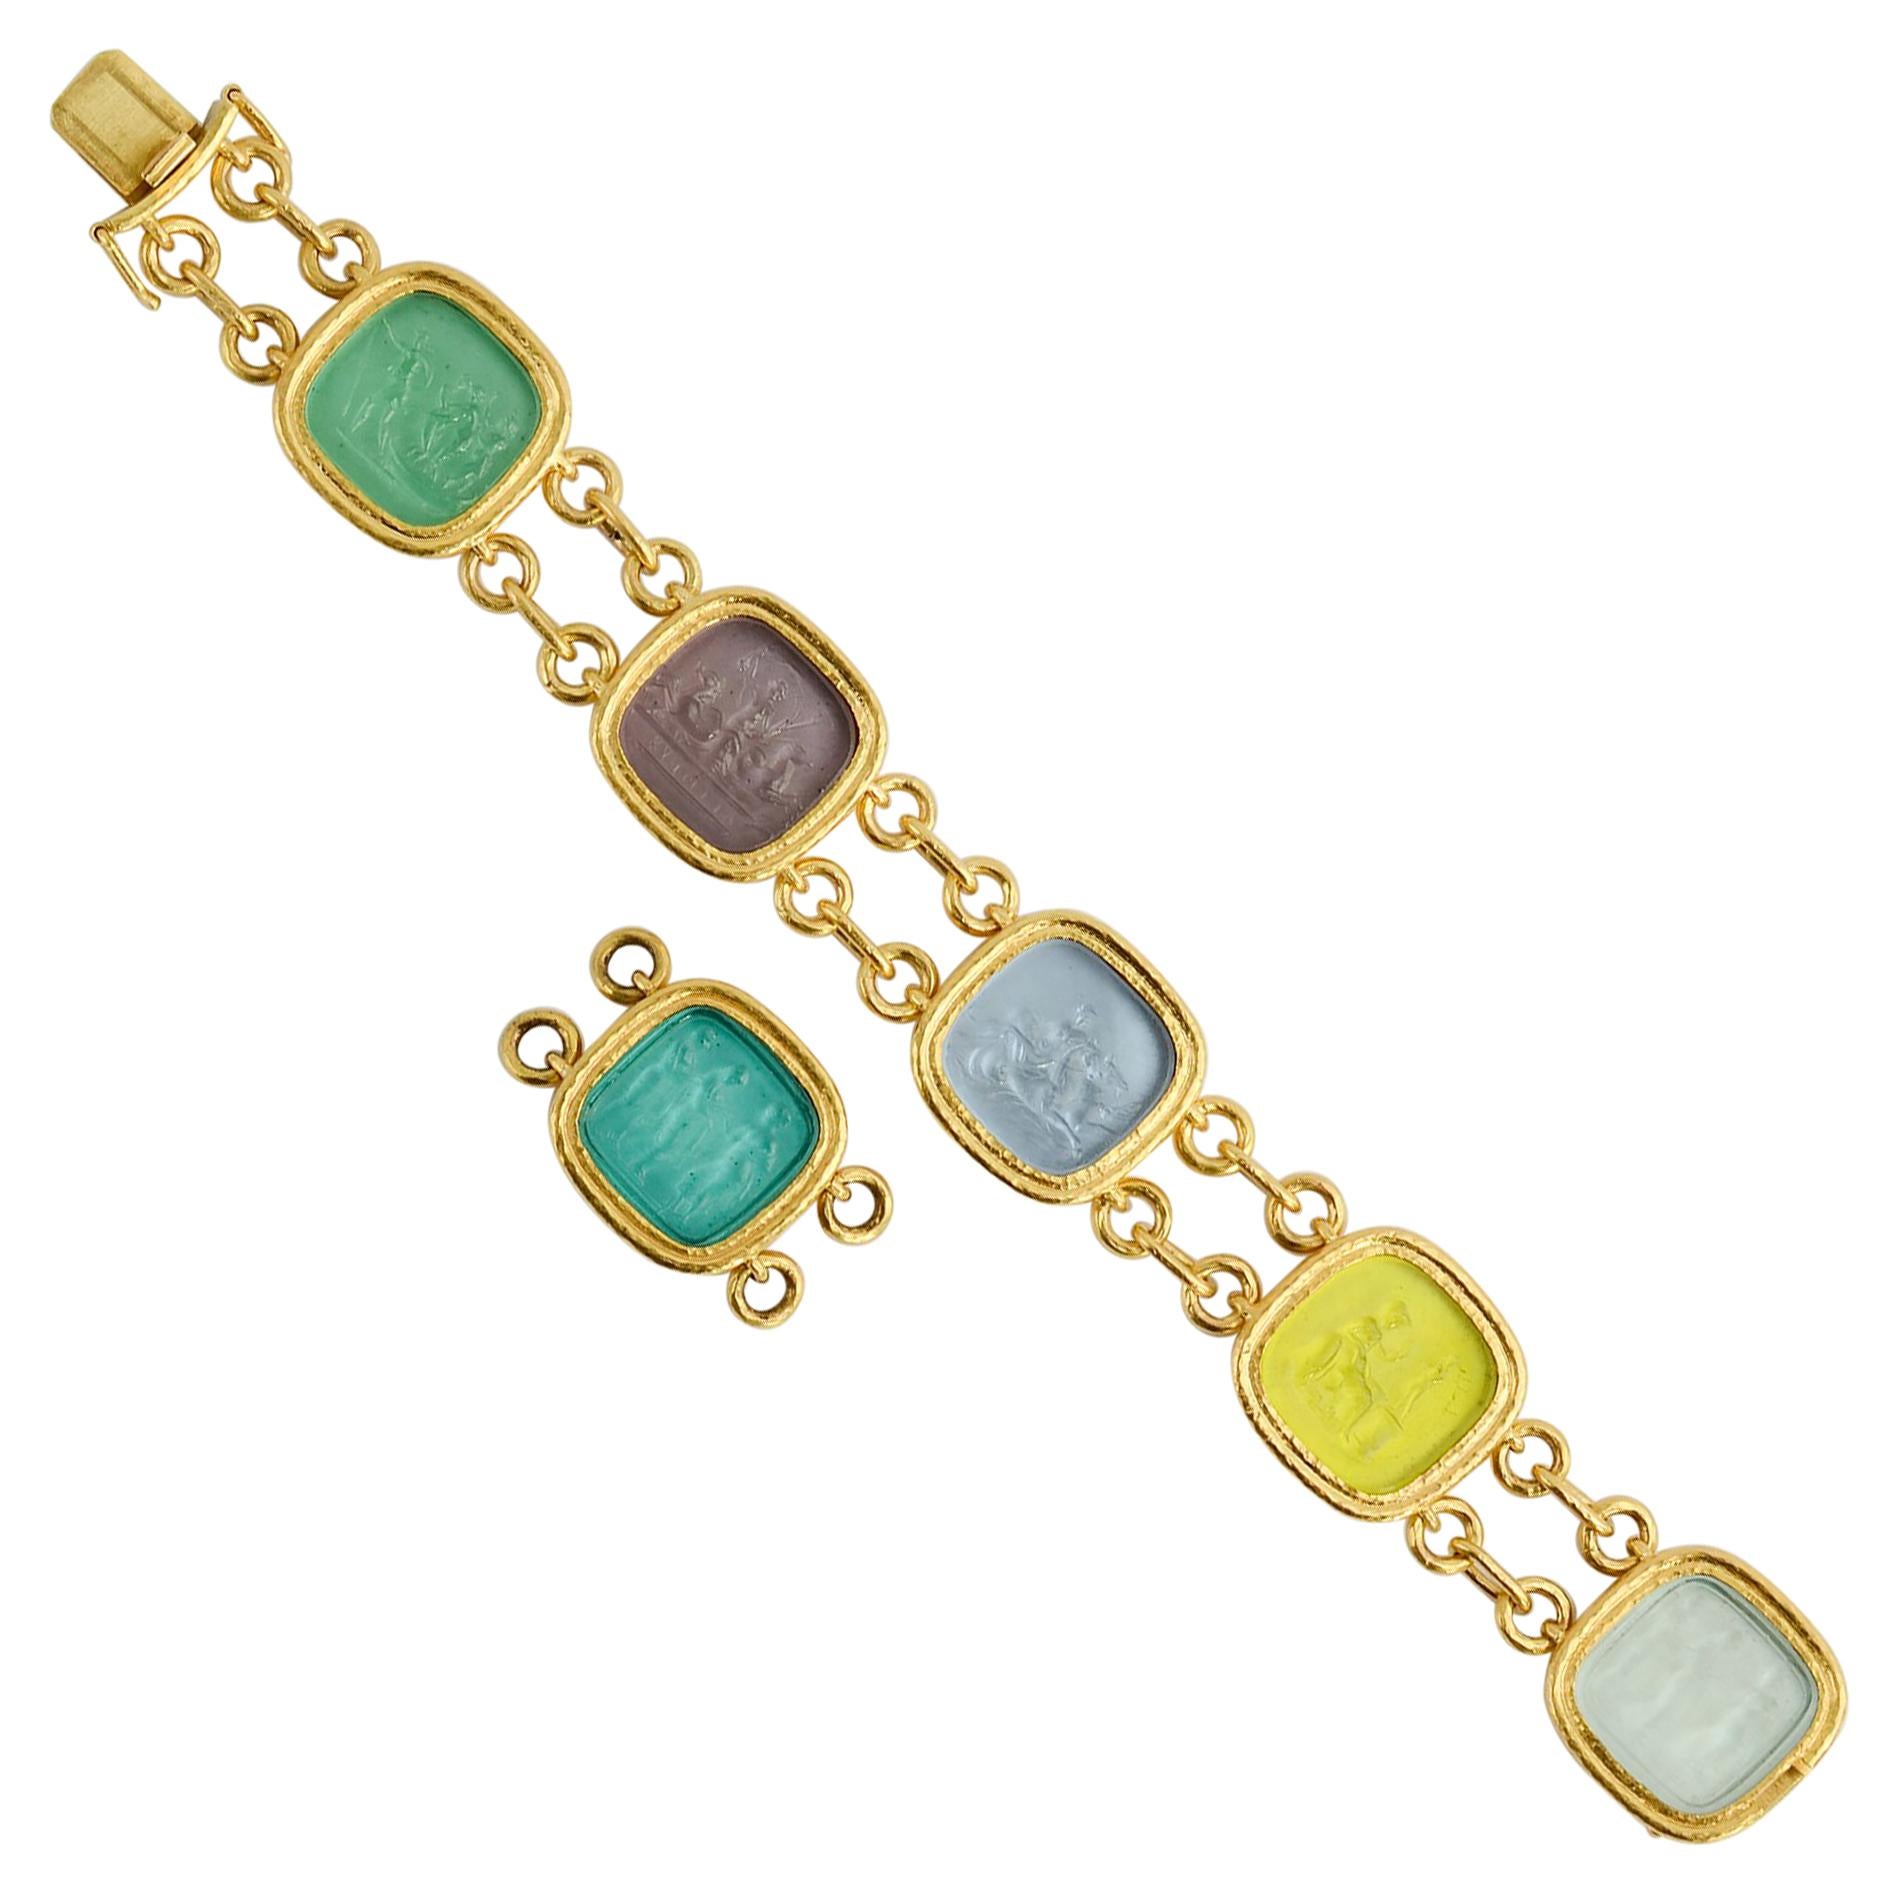 Elizabeth Locke Intaglio Gold Bracelet with Pendant